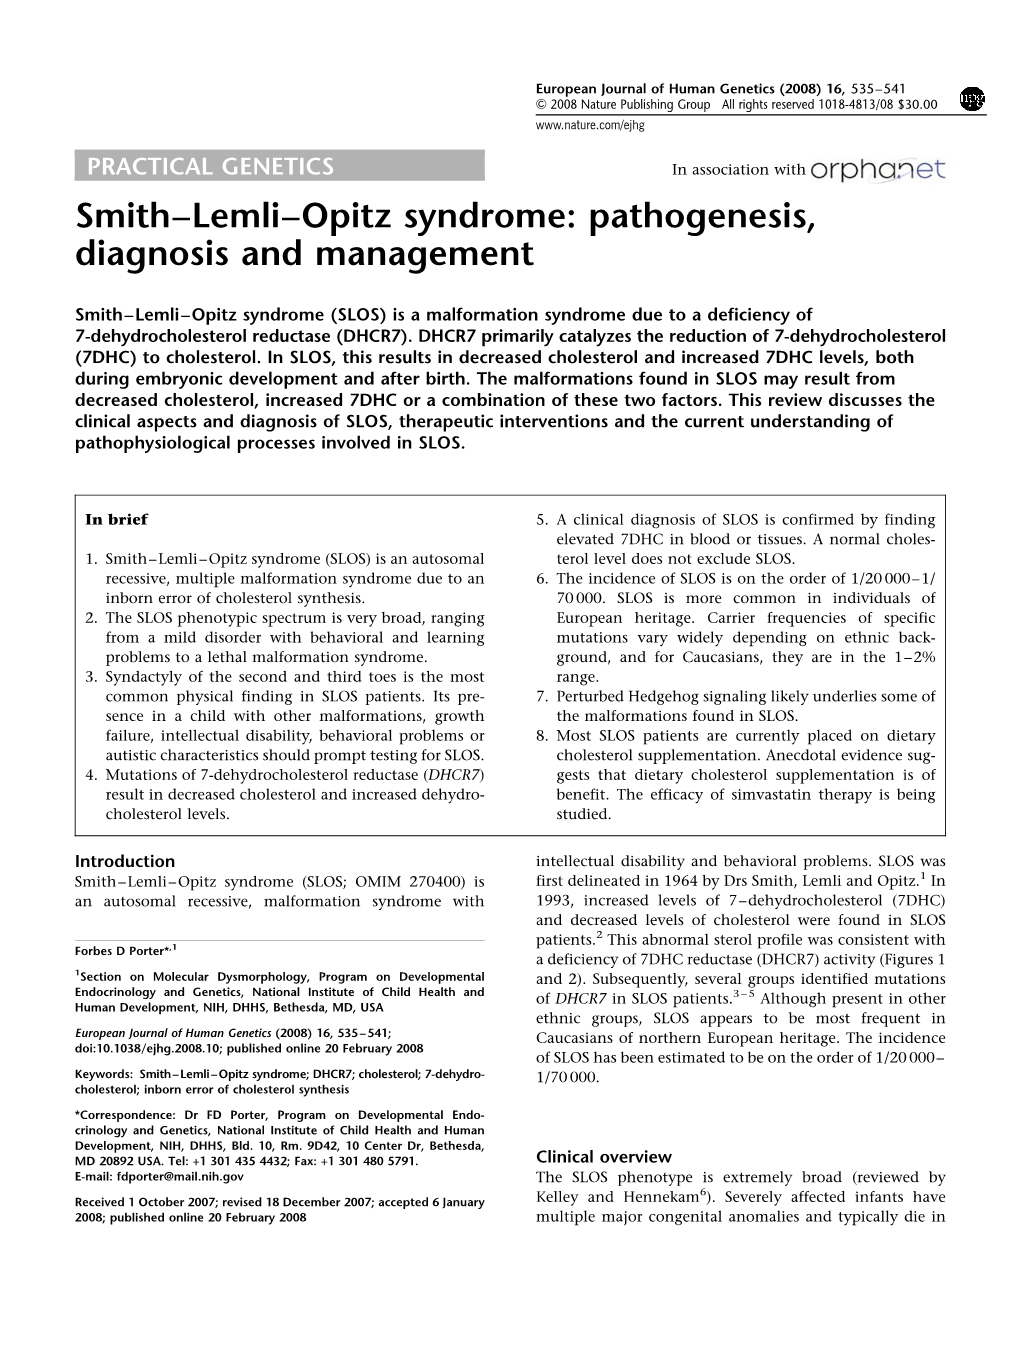 Smith–Lemli–Opitz Syndrome: Pathogenesis, Diagnosis and Management